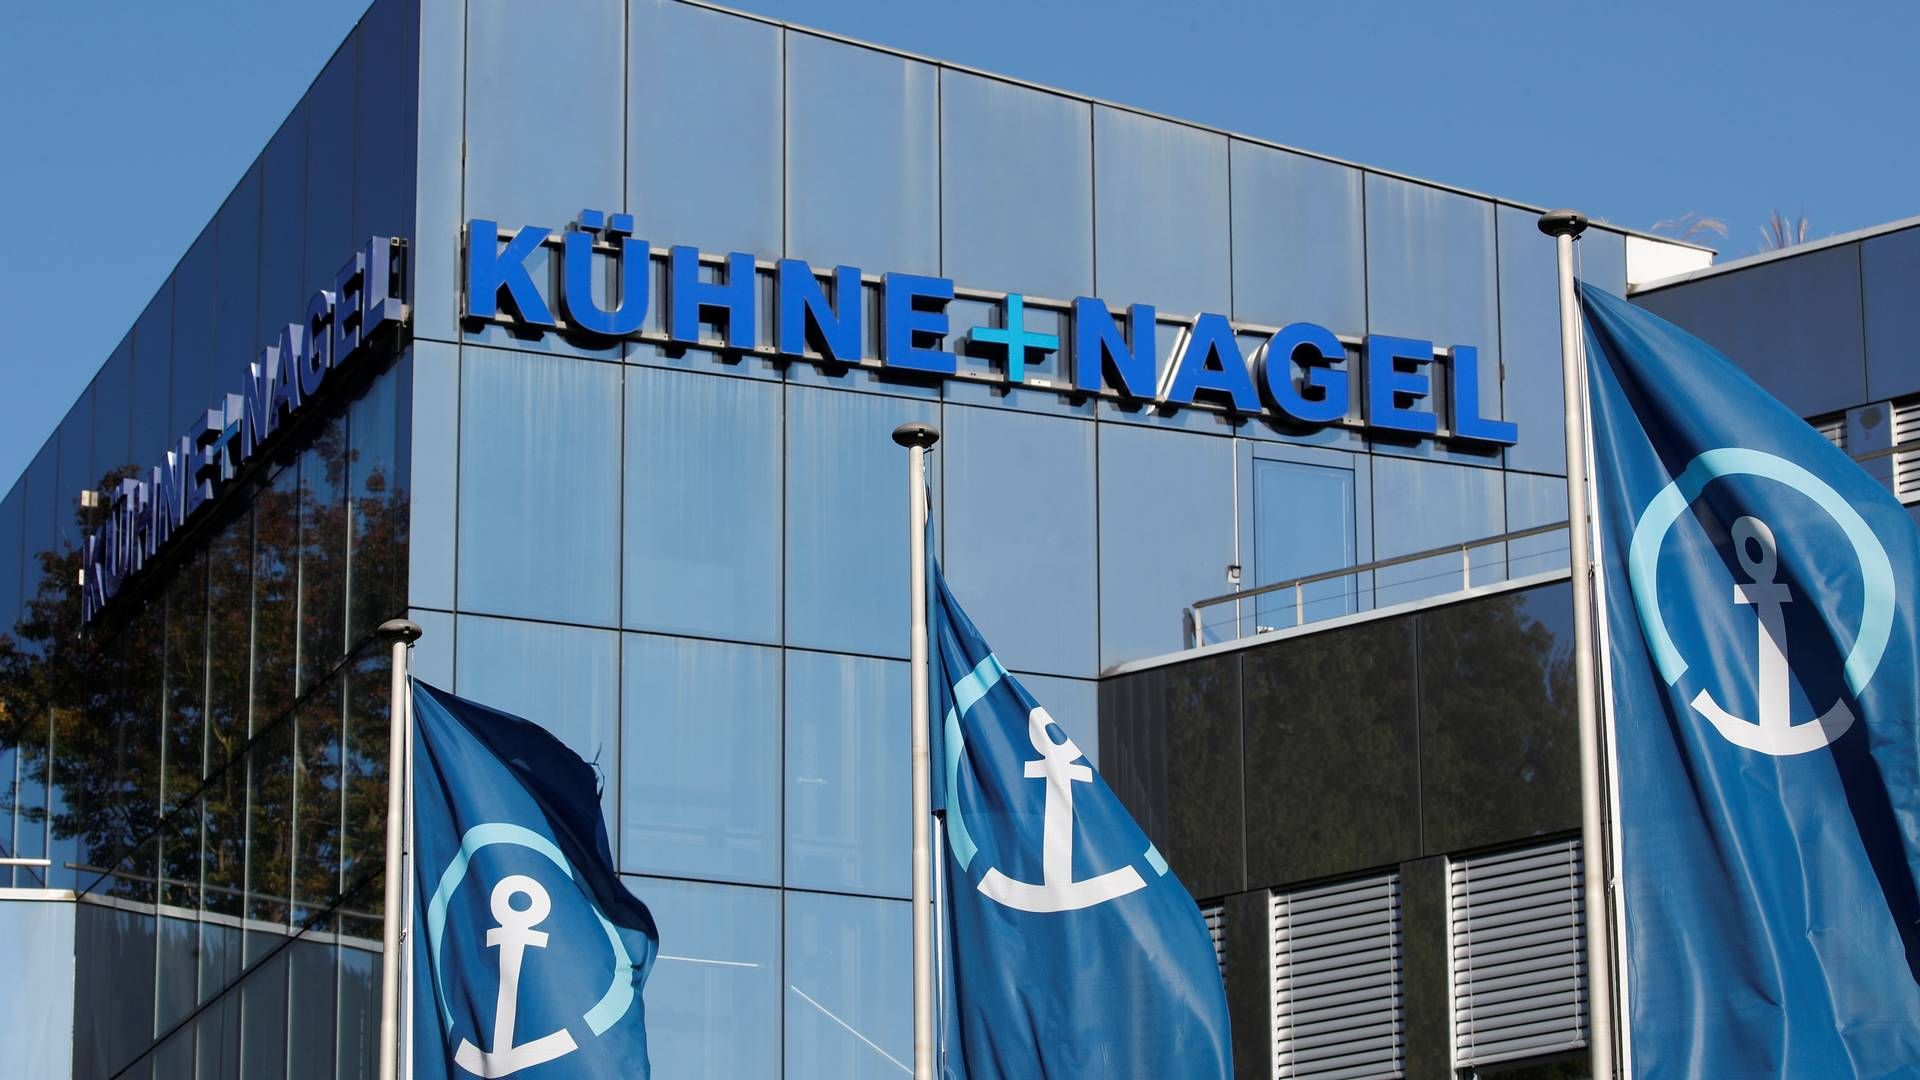 Kuehne + Nagel has published its accounts on Friday morning | Photo: Arnd Wiegmann/Reuters/Ritzau Scanpix